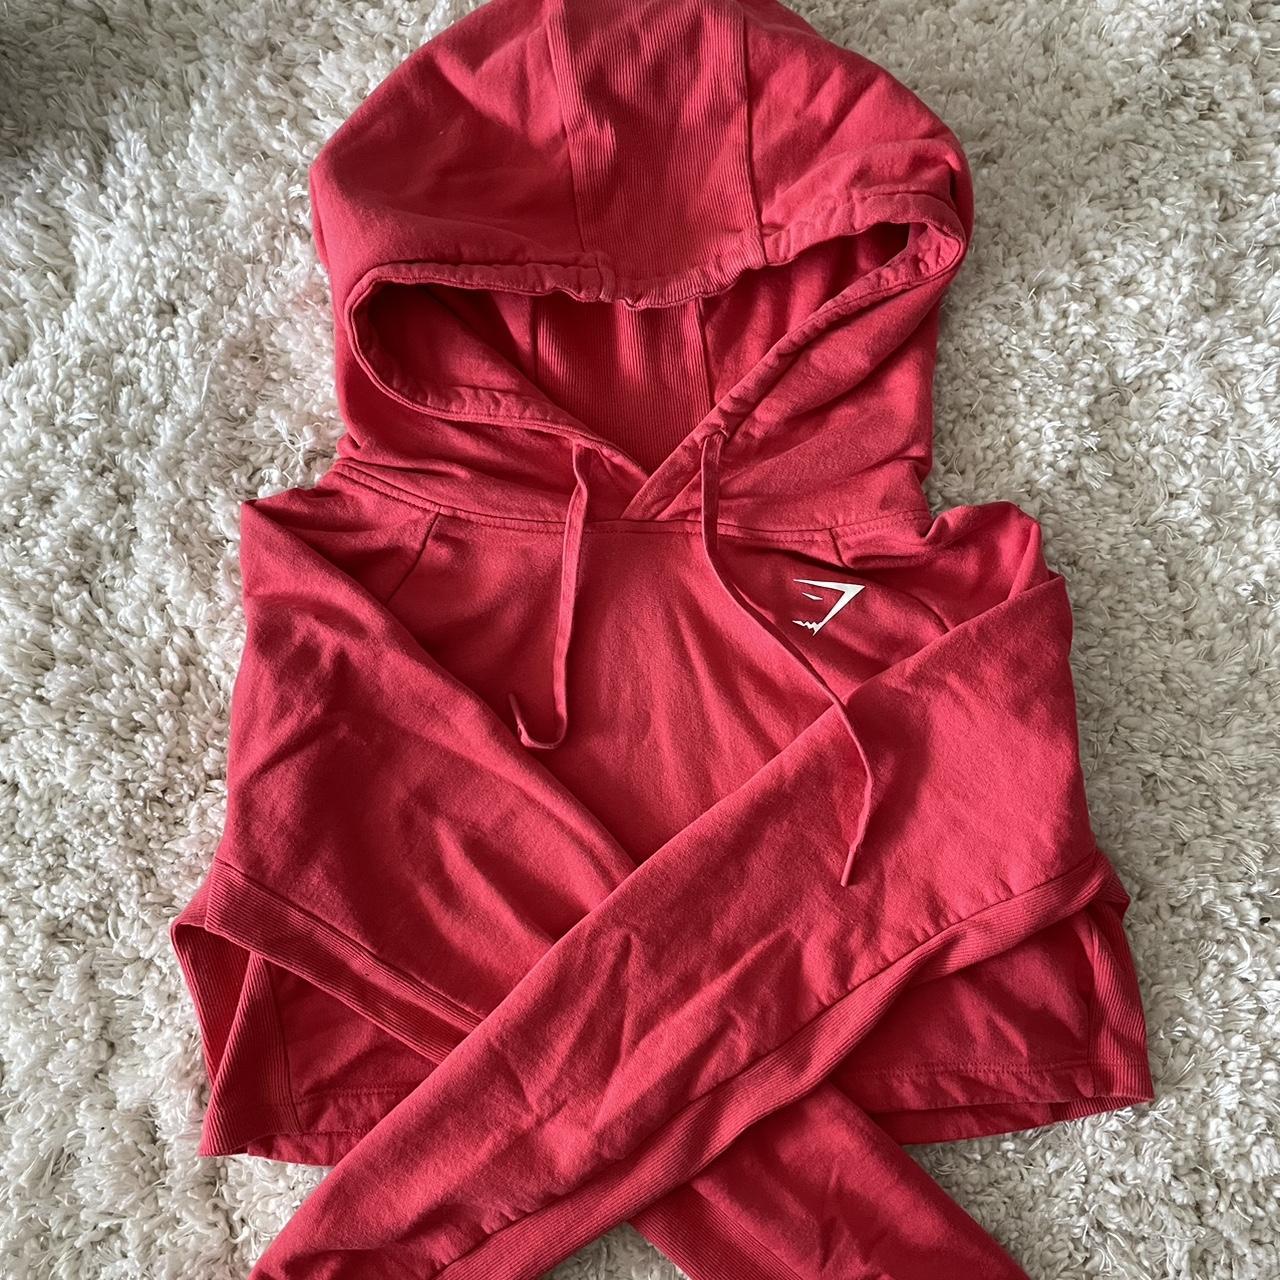 Gymshark red cropped hoodie , Lightly worn - great